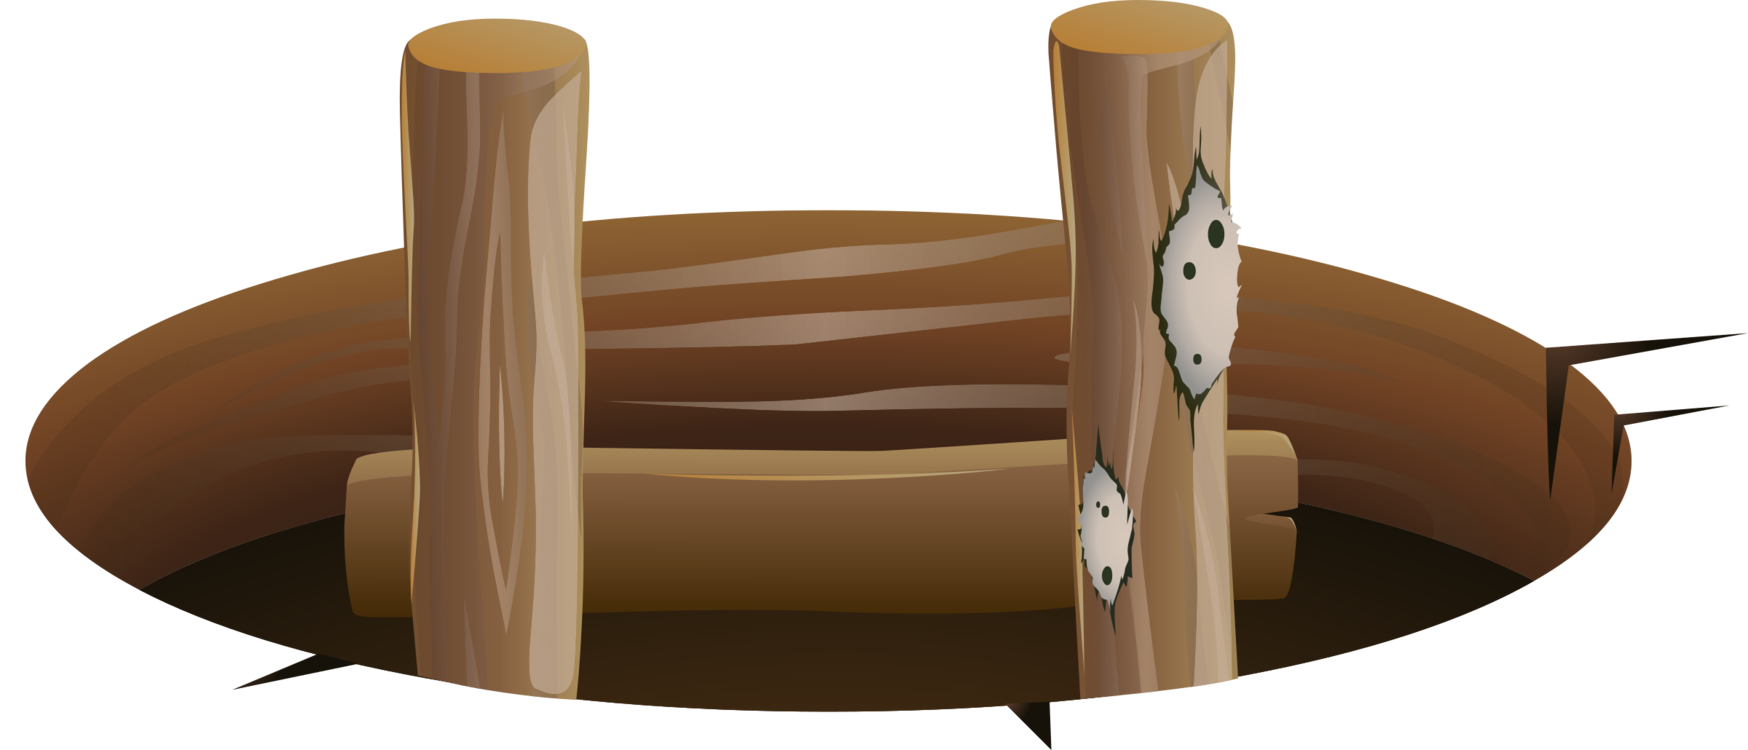 Cylinder,Angle,Wood